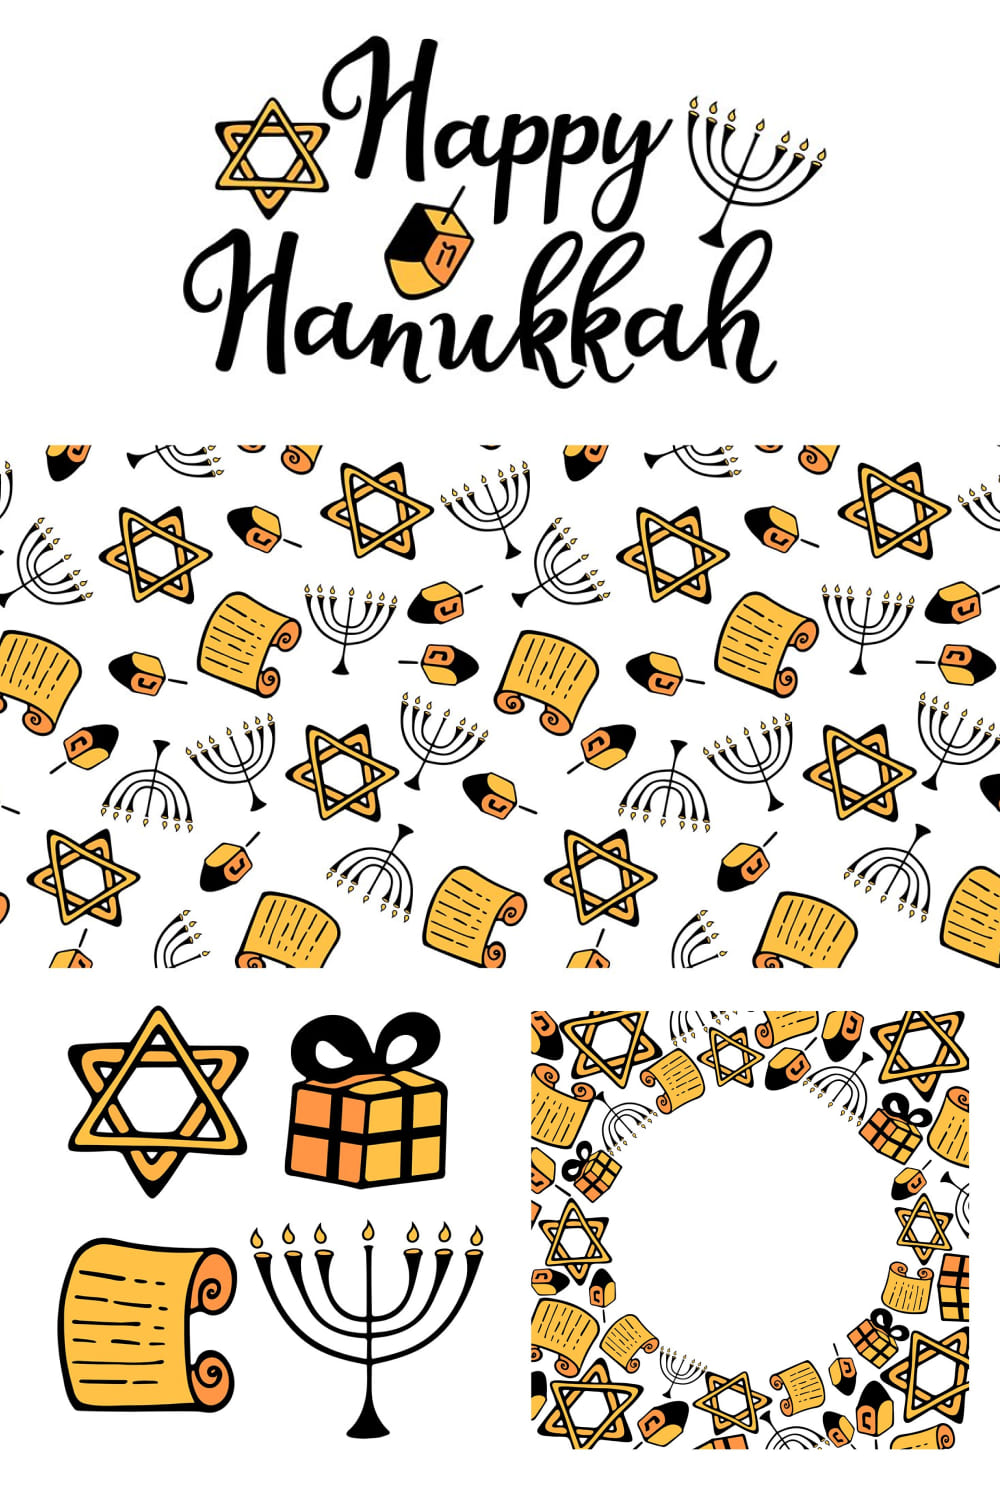 Happy hanukkah. traditional attributes of pinterest.